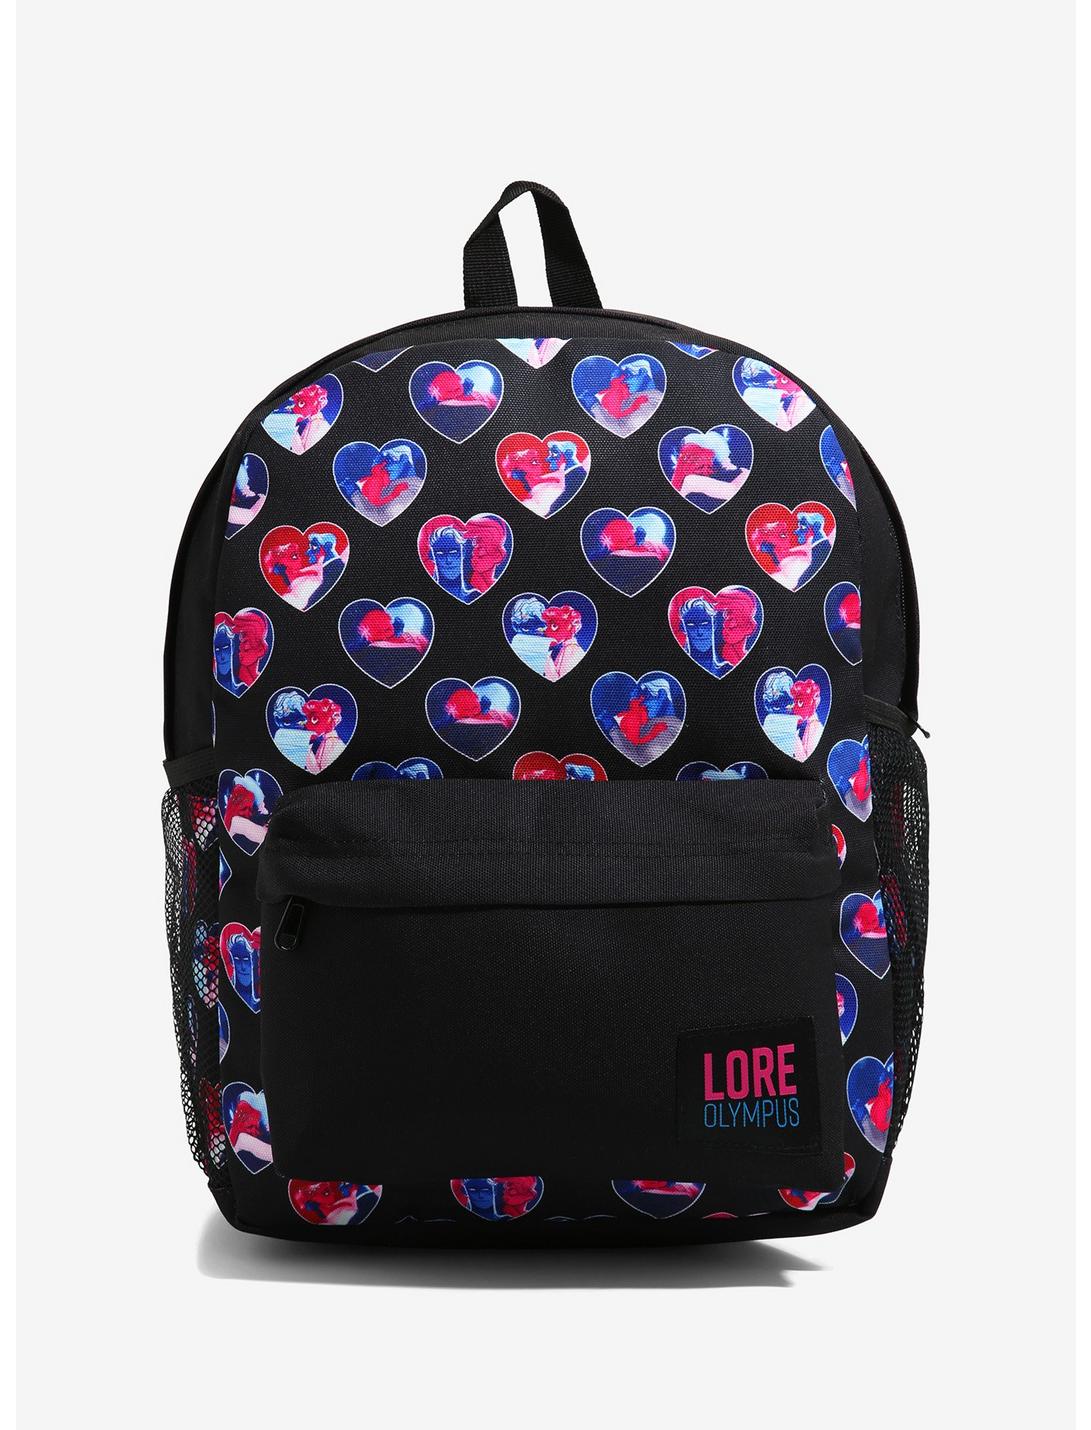 Lore Olympus Heart Backpack, , hi-res